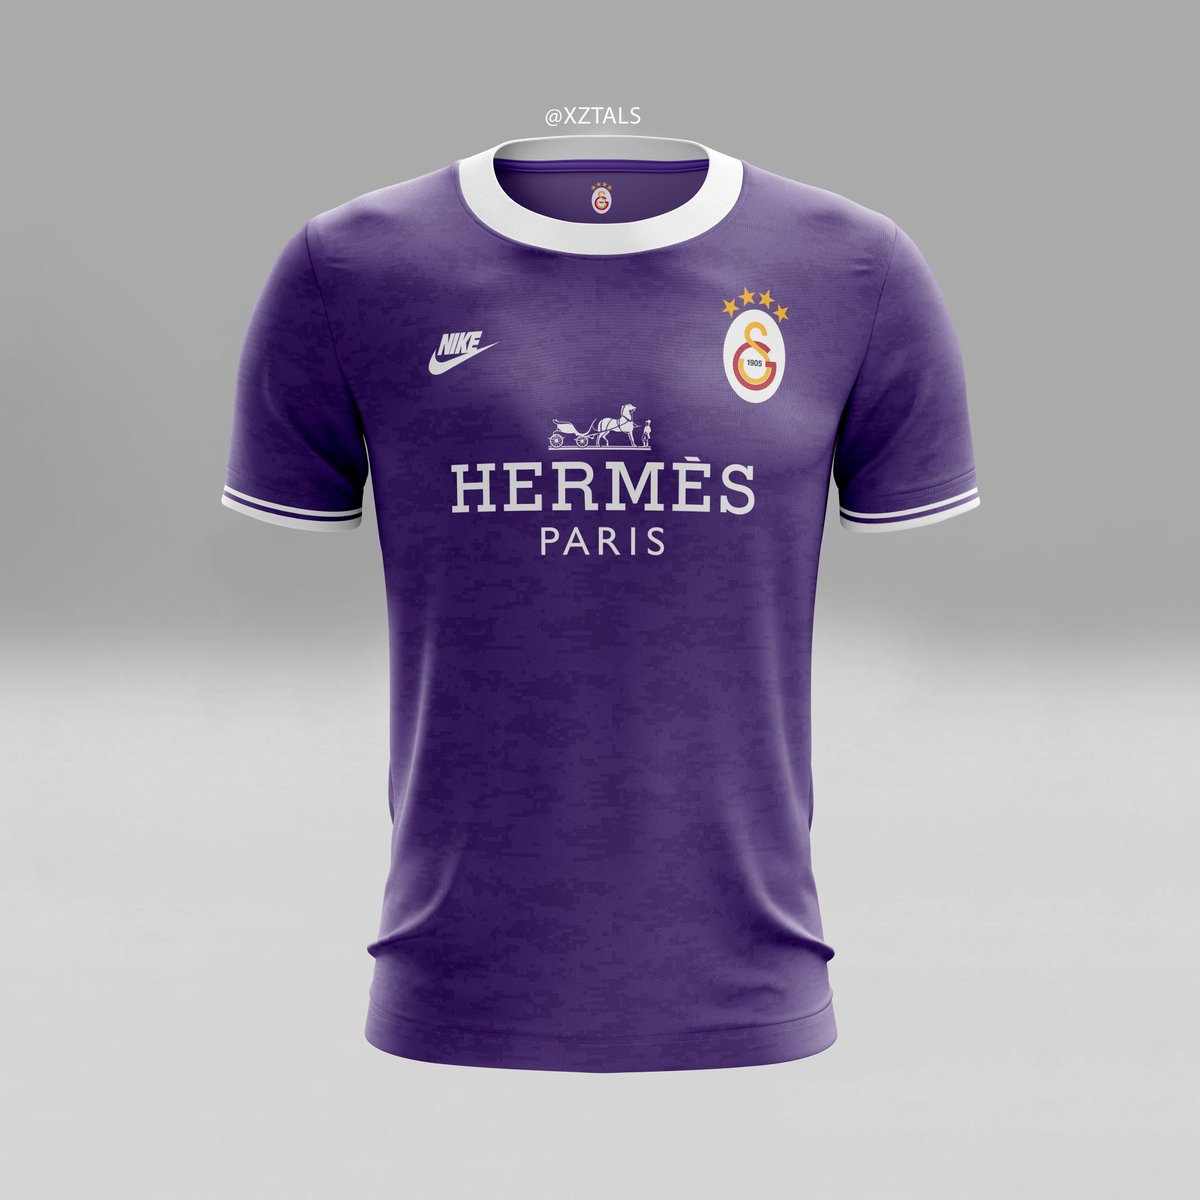 Andy on Twitter: "@Galatasaray x @Nike x @PierreHerme 2017/18 Third kit concept #hermes #galatasaray https://t.co/Am0W4twTWR" / Twitter